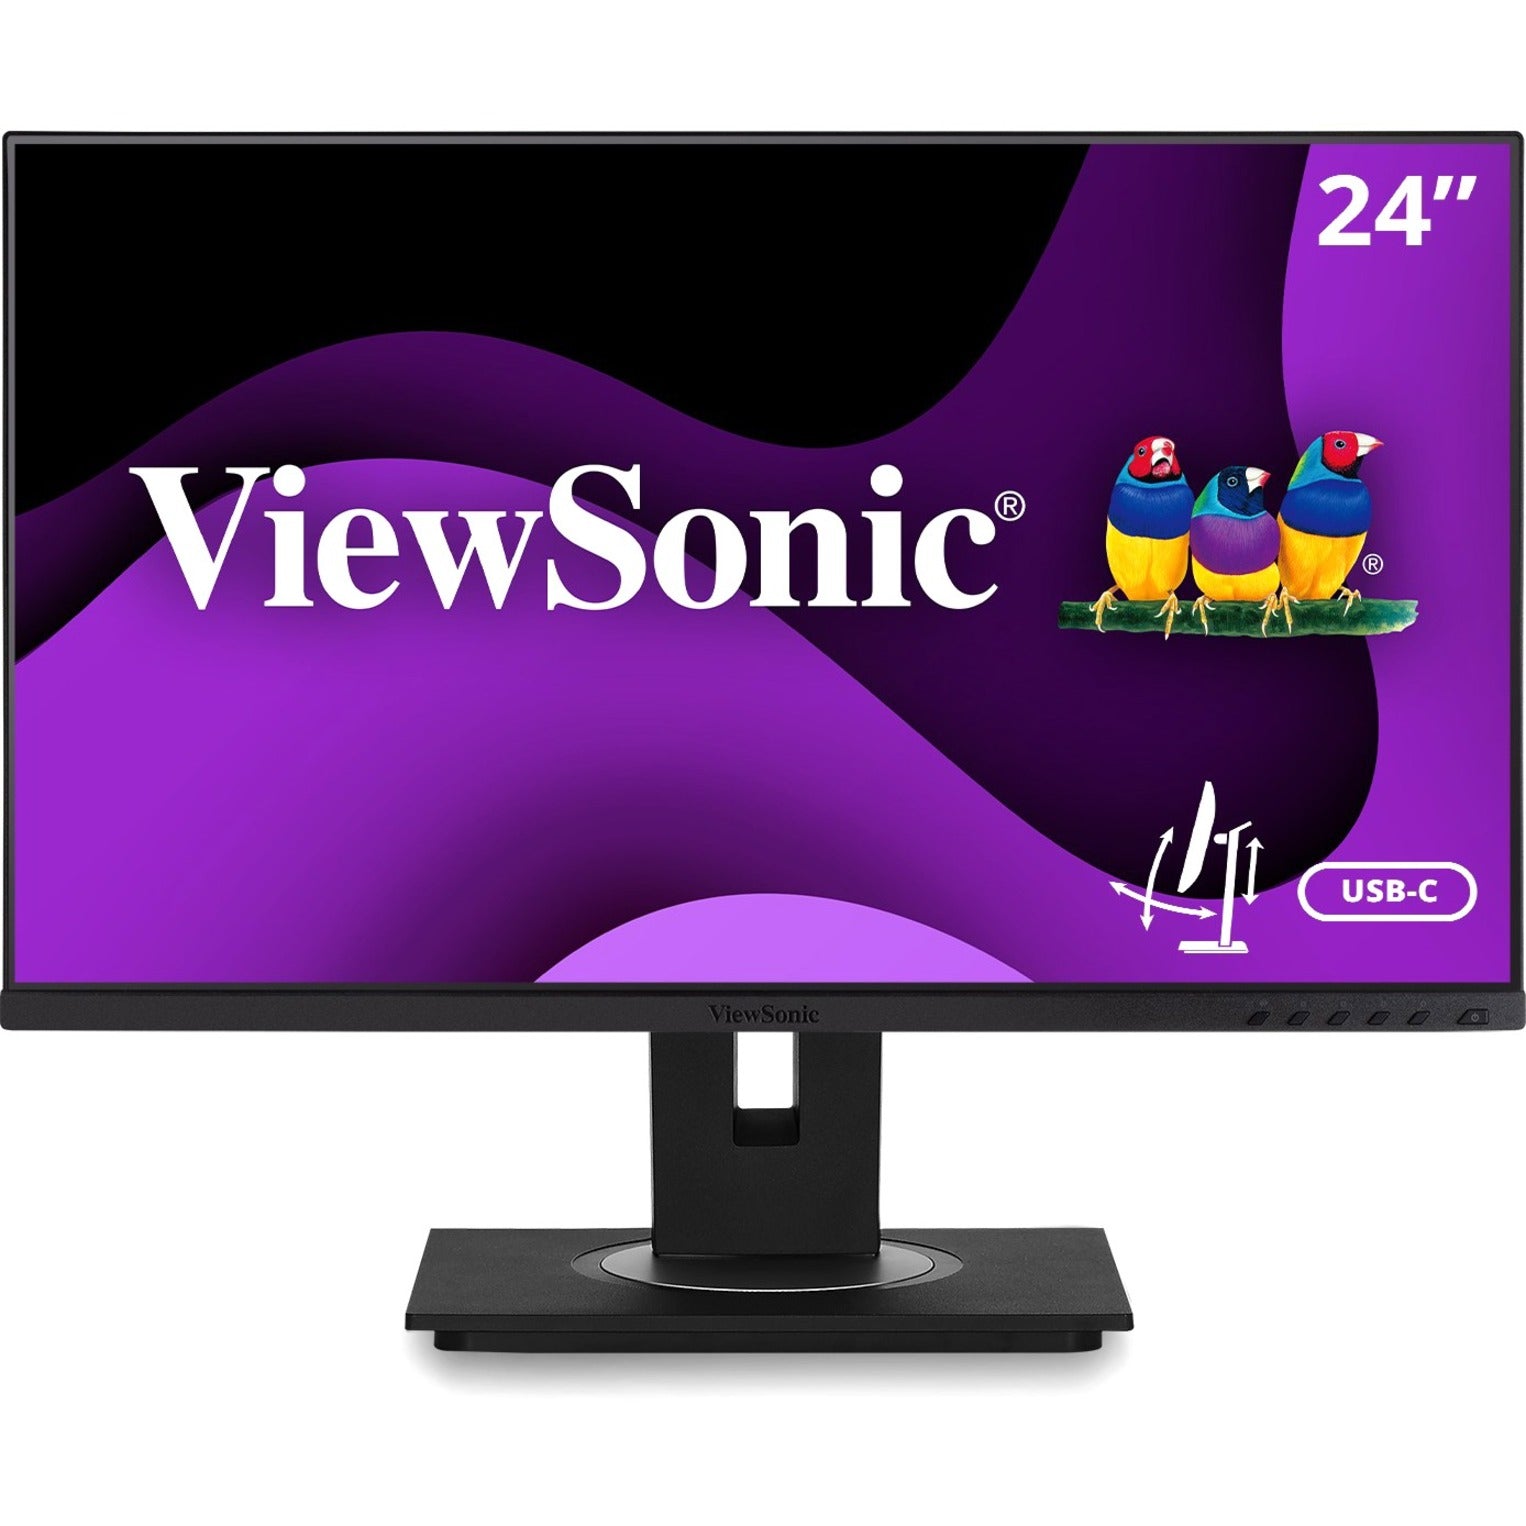 ViewSonic VG2456 24 USB-C Docking Monitor, Built-In Ethernet, Advanced Ergonomics